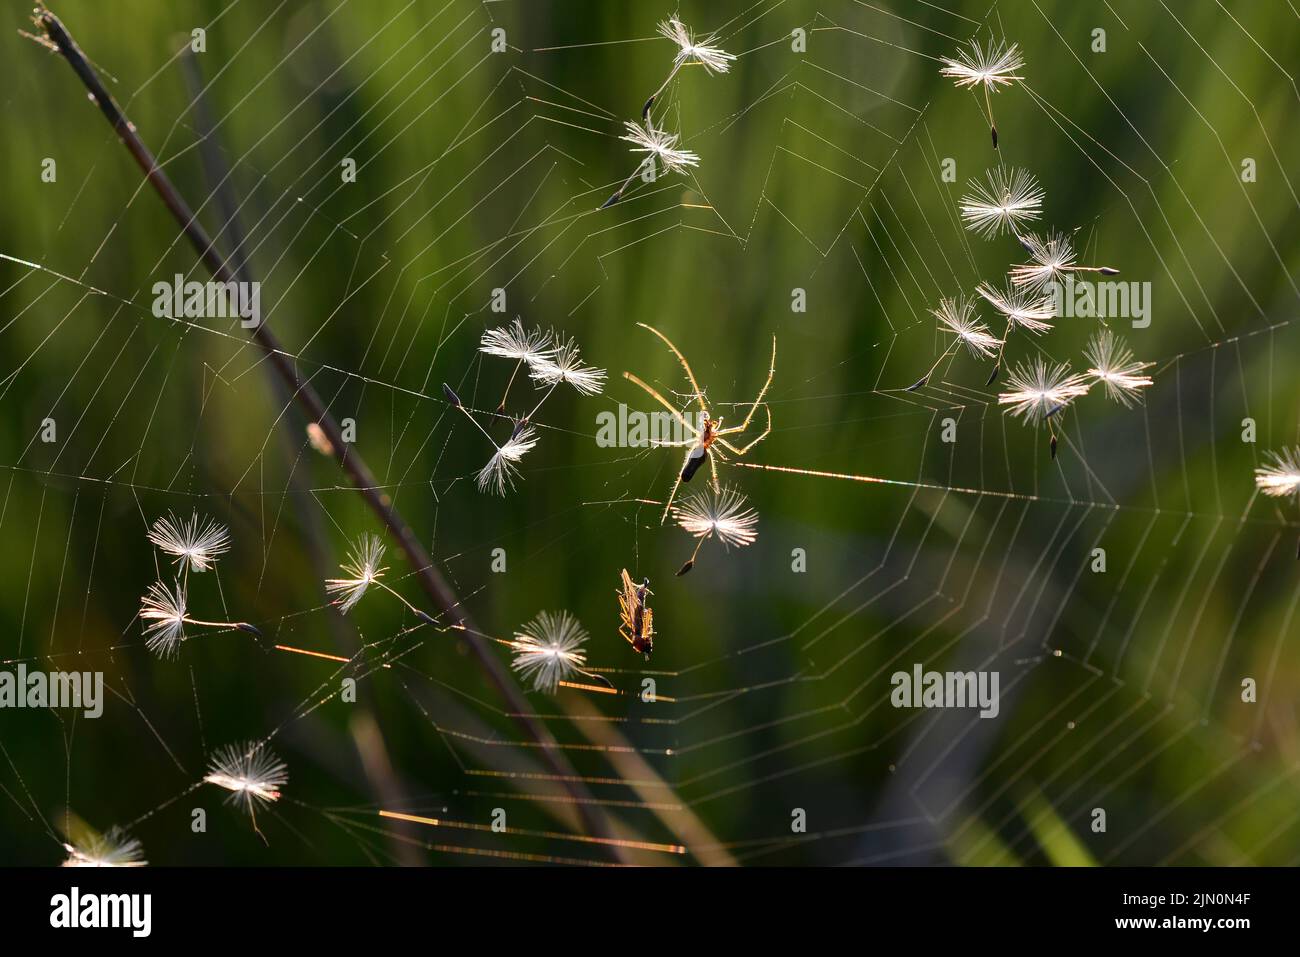 dandelion seeds cauaght on spider's web Stock Photo